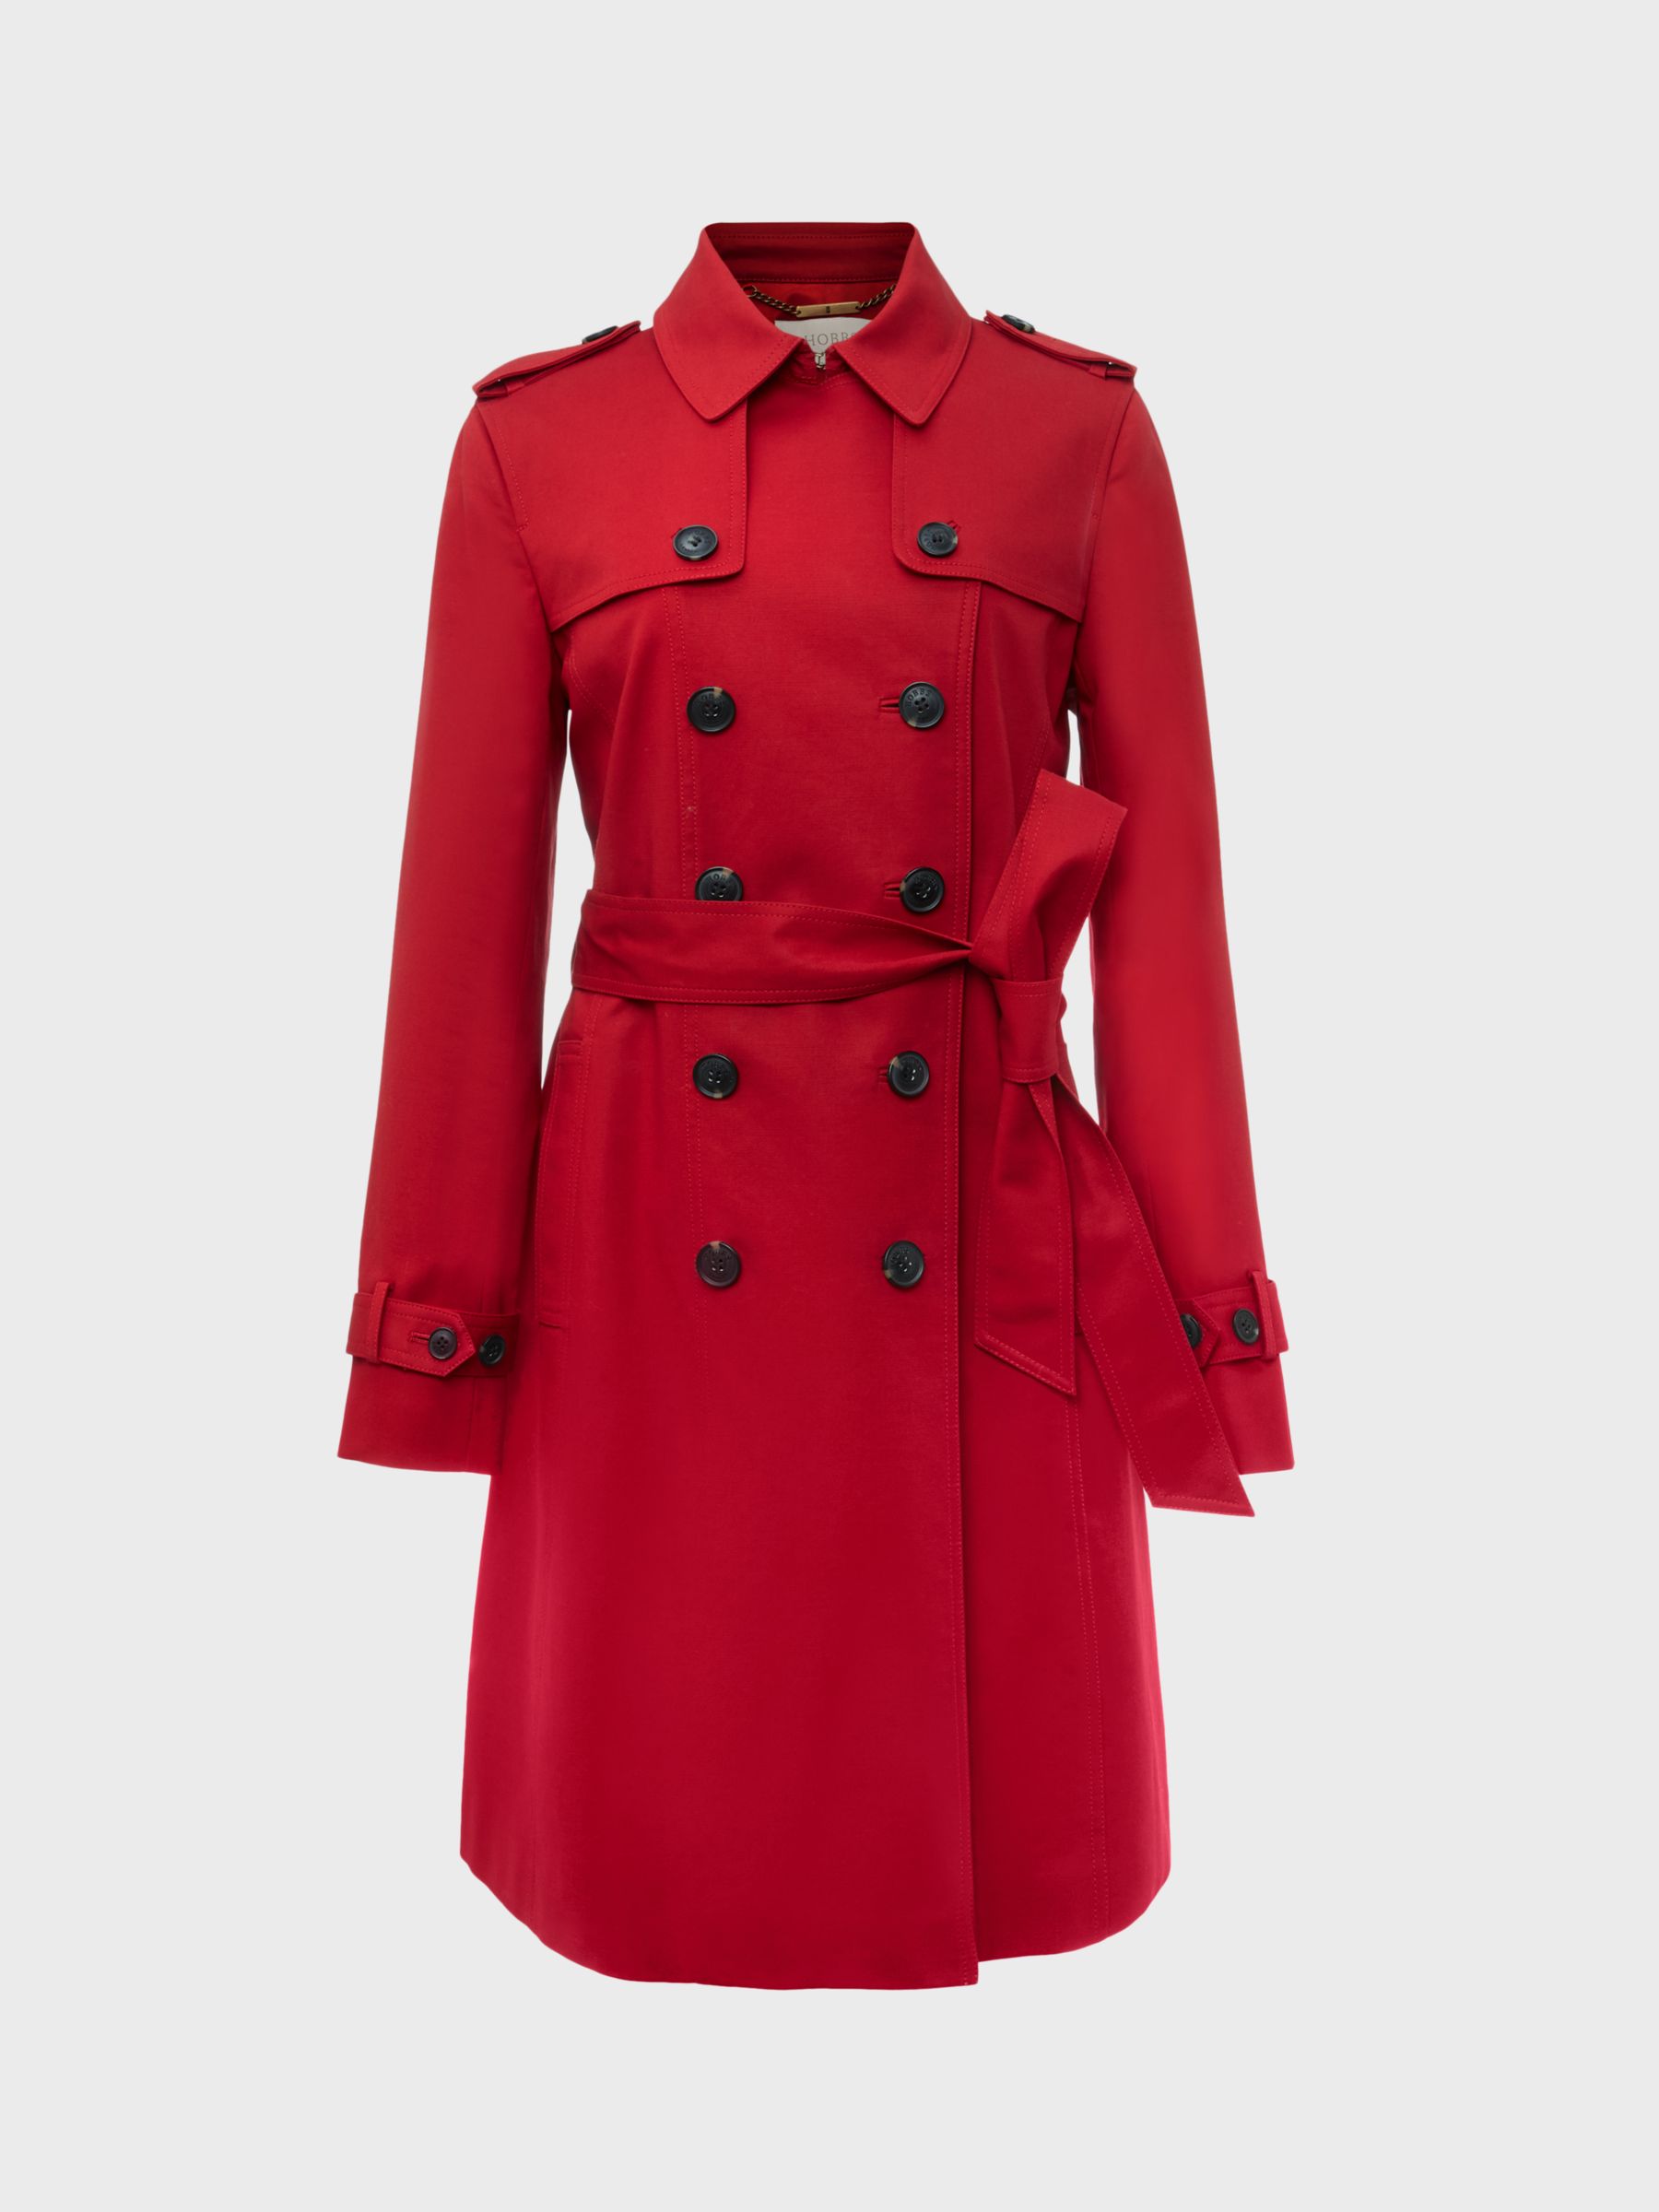 Hobbs Saskia Trench Coat, Red at John Lewis & Partners